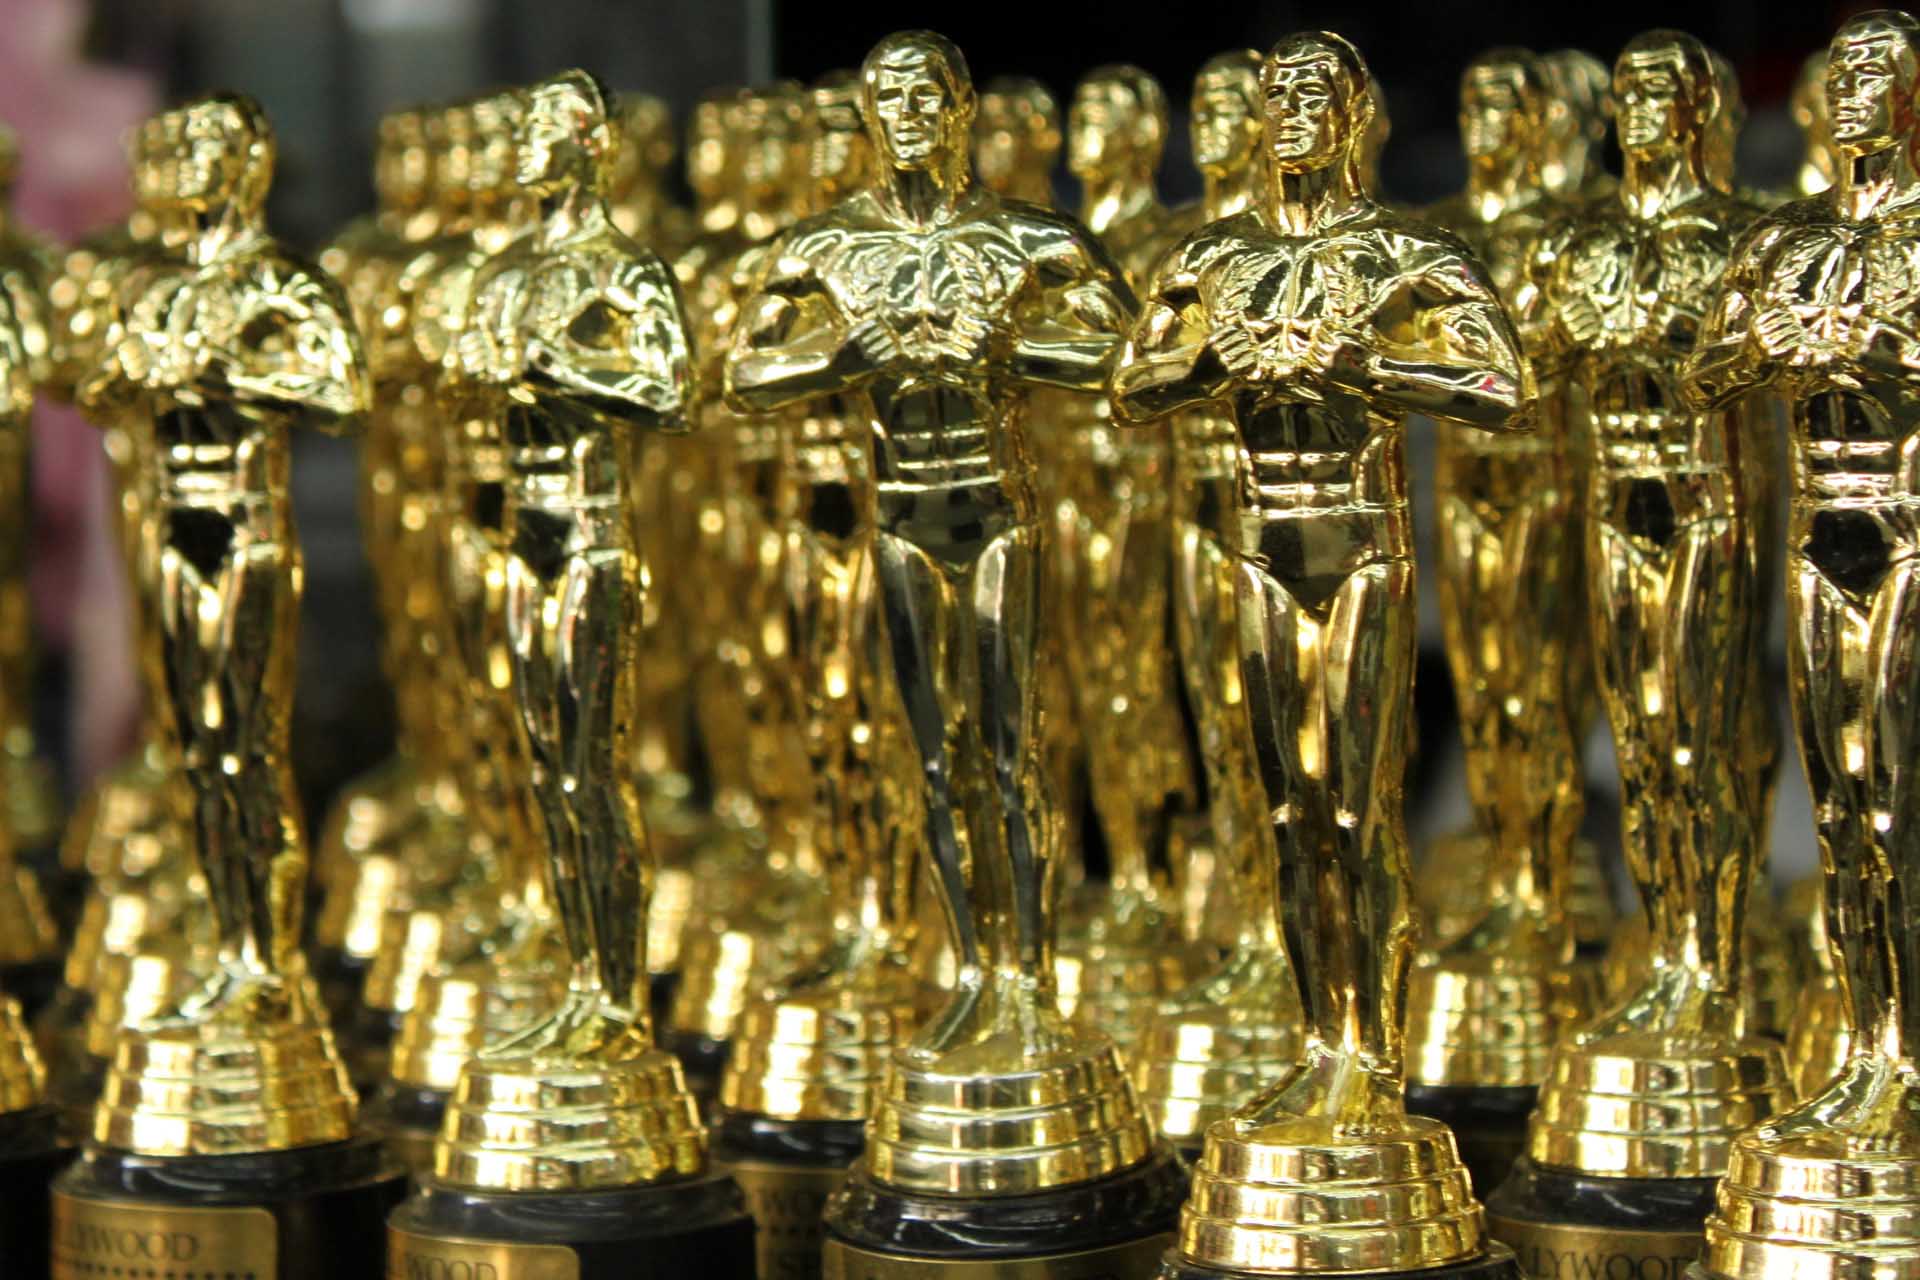 Best Oscar Movie Websites - Intechnic's Award Winners for 2017